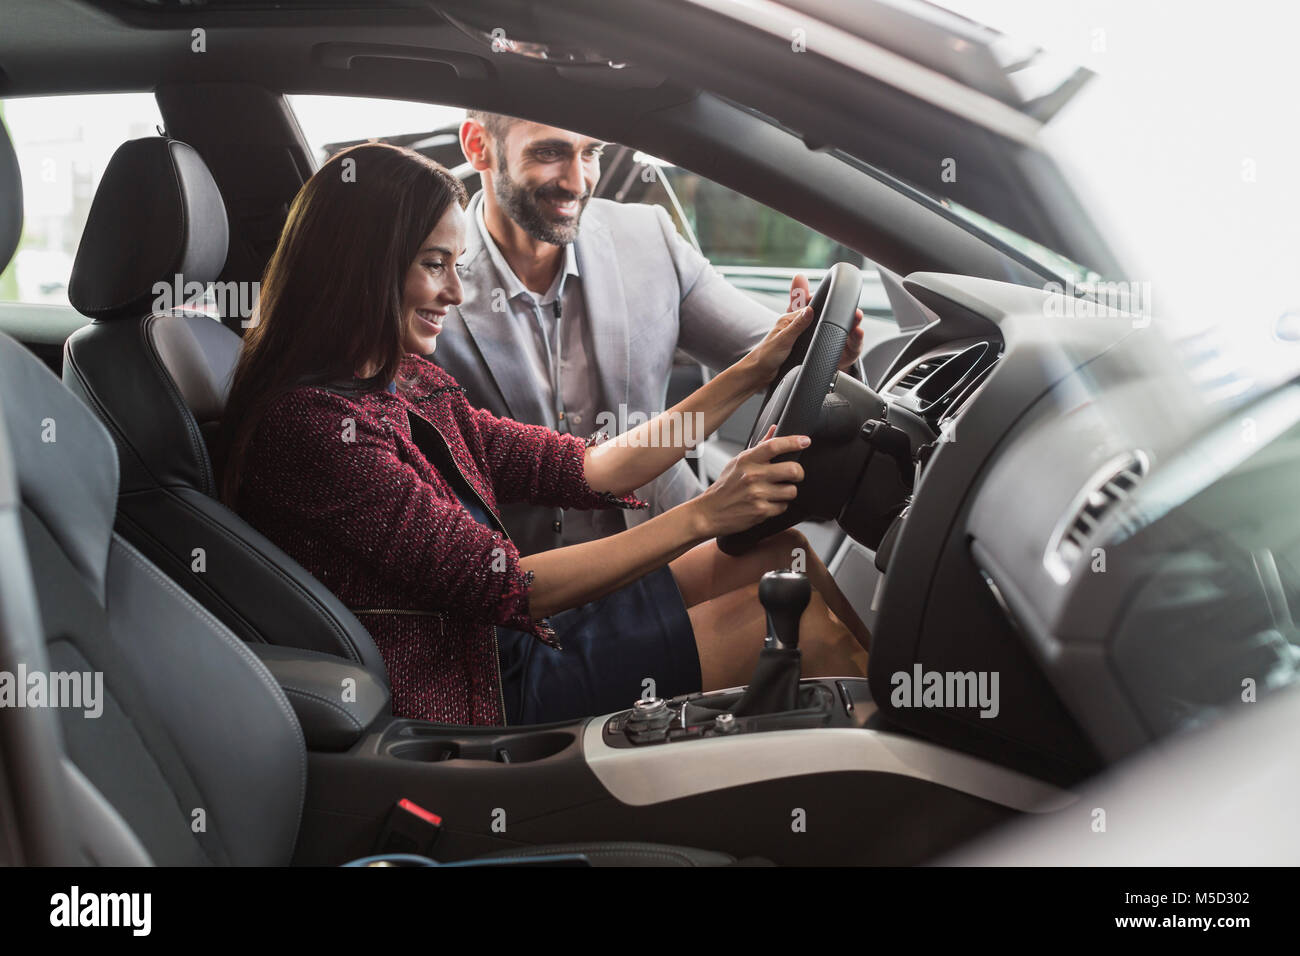 Car salesman and female customer in driver’s seat of new car in car dealership showroom Stock Photo